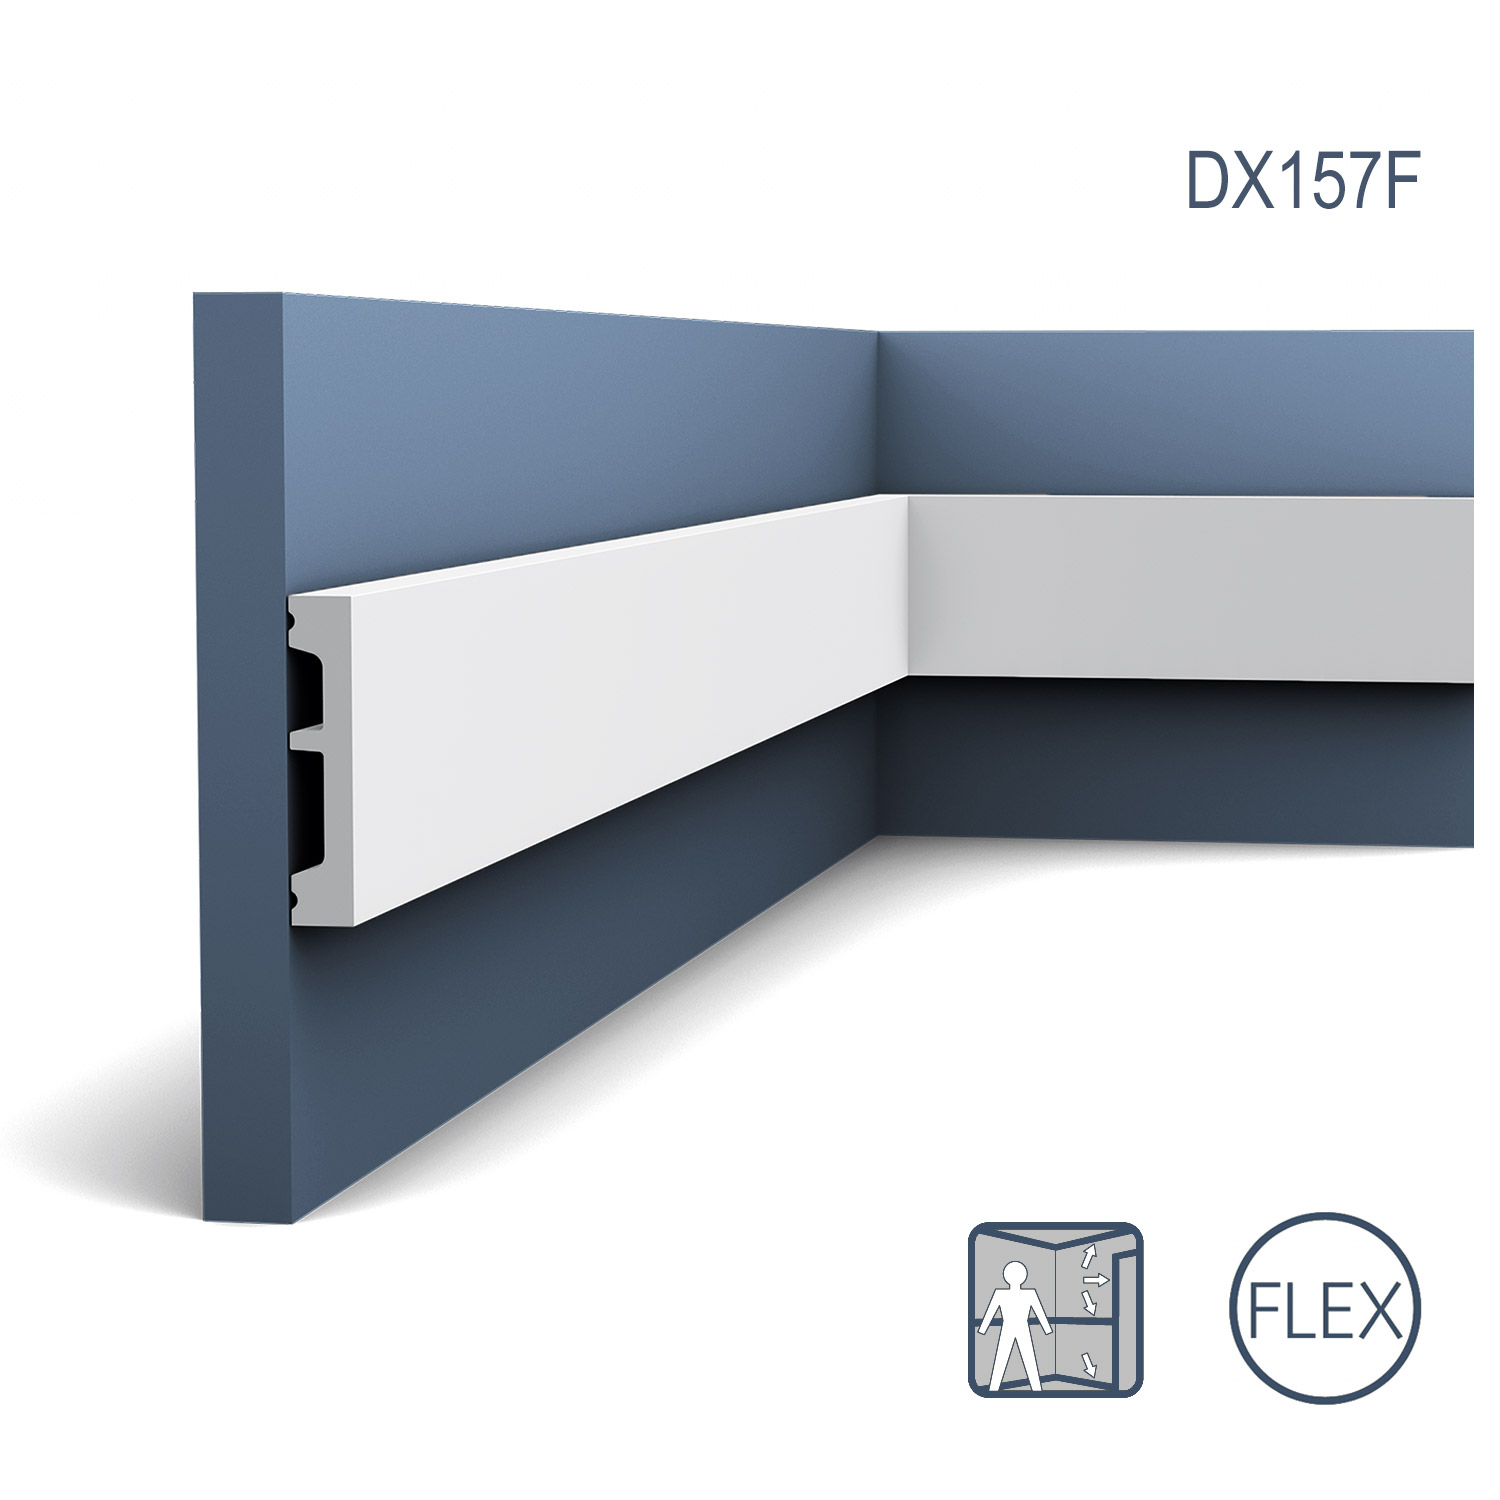 Plinta Flex Axxent SX157F, Dimensiuni: 200 X 1.3 X 6.6 cm, Orac Decor Orac Decor